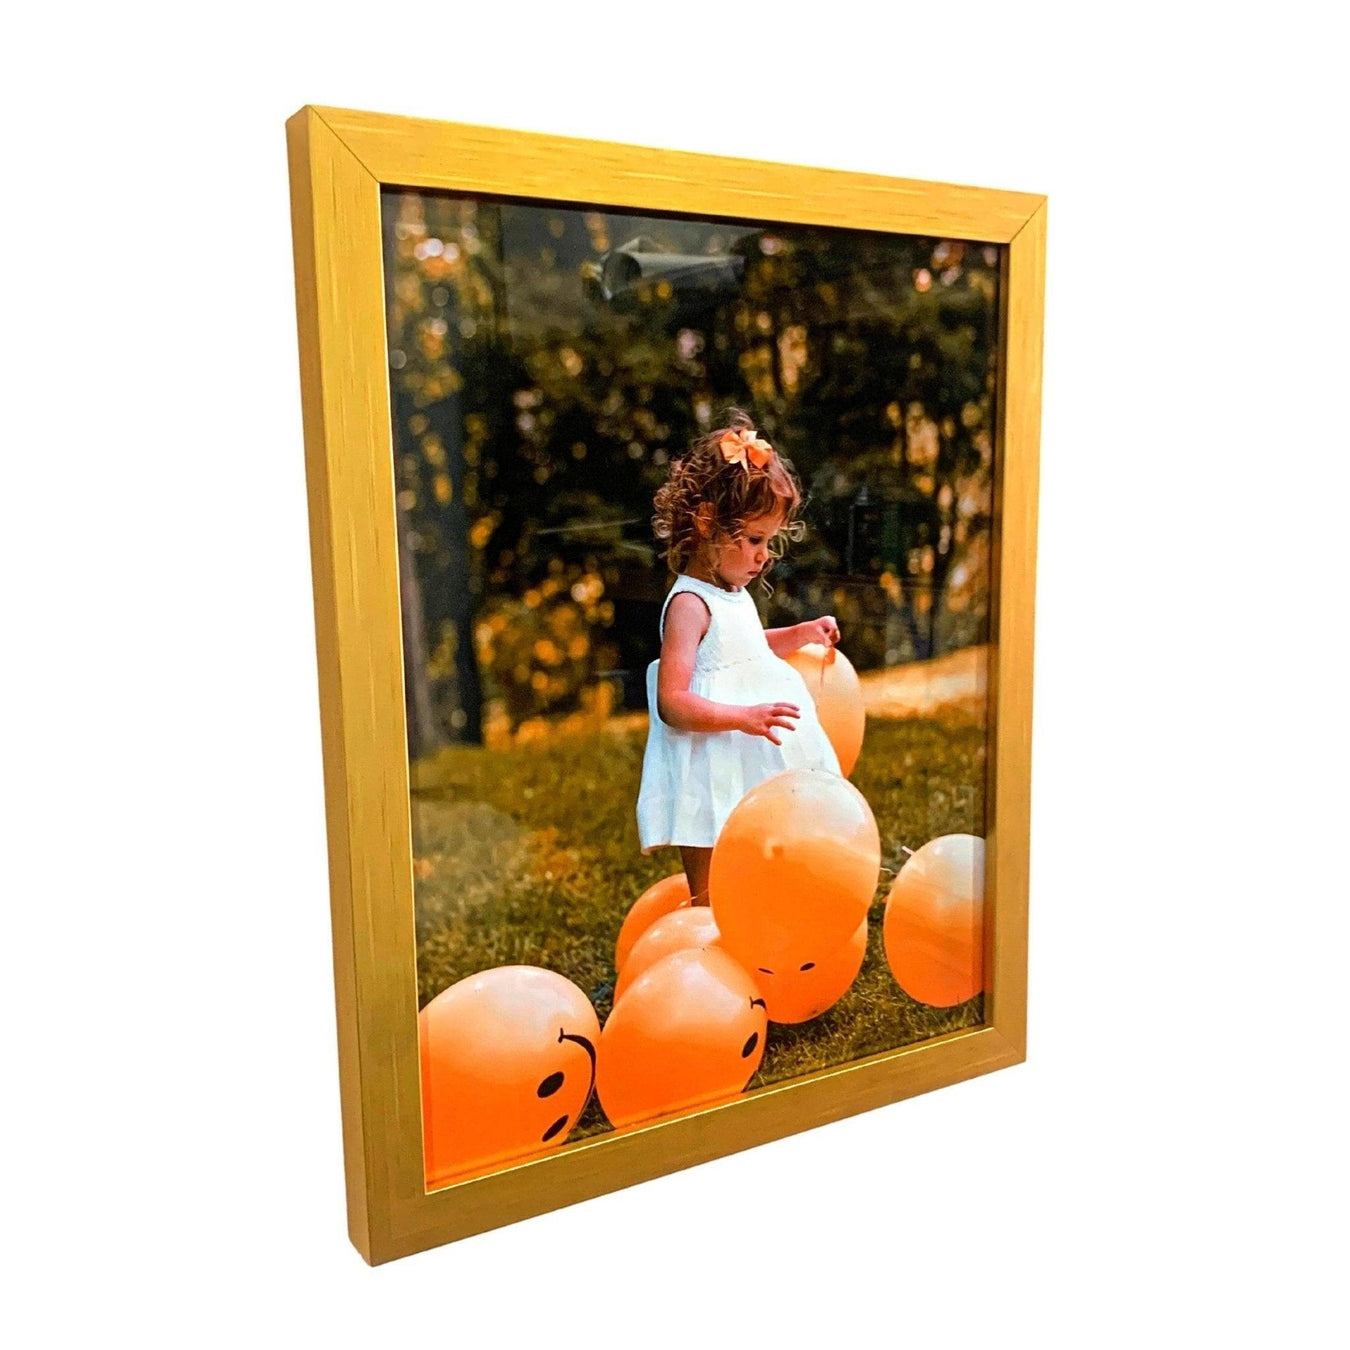 Modern Wooden Gold Picture Frame - Modern Memory Design Picture frames - New Jersey Frame Shop Custom Framing